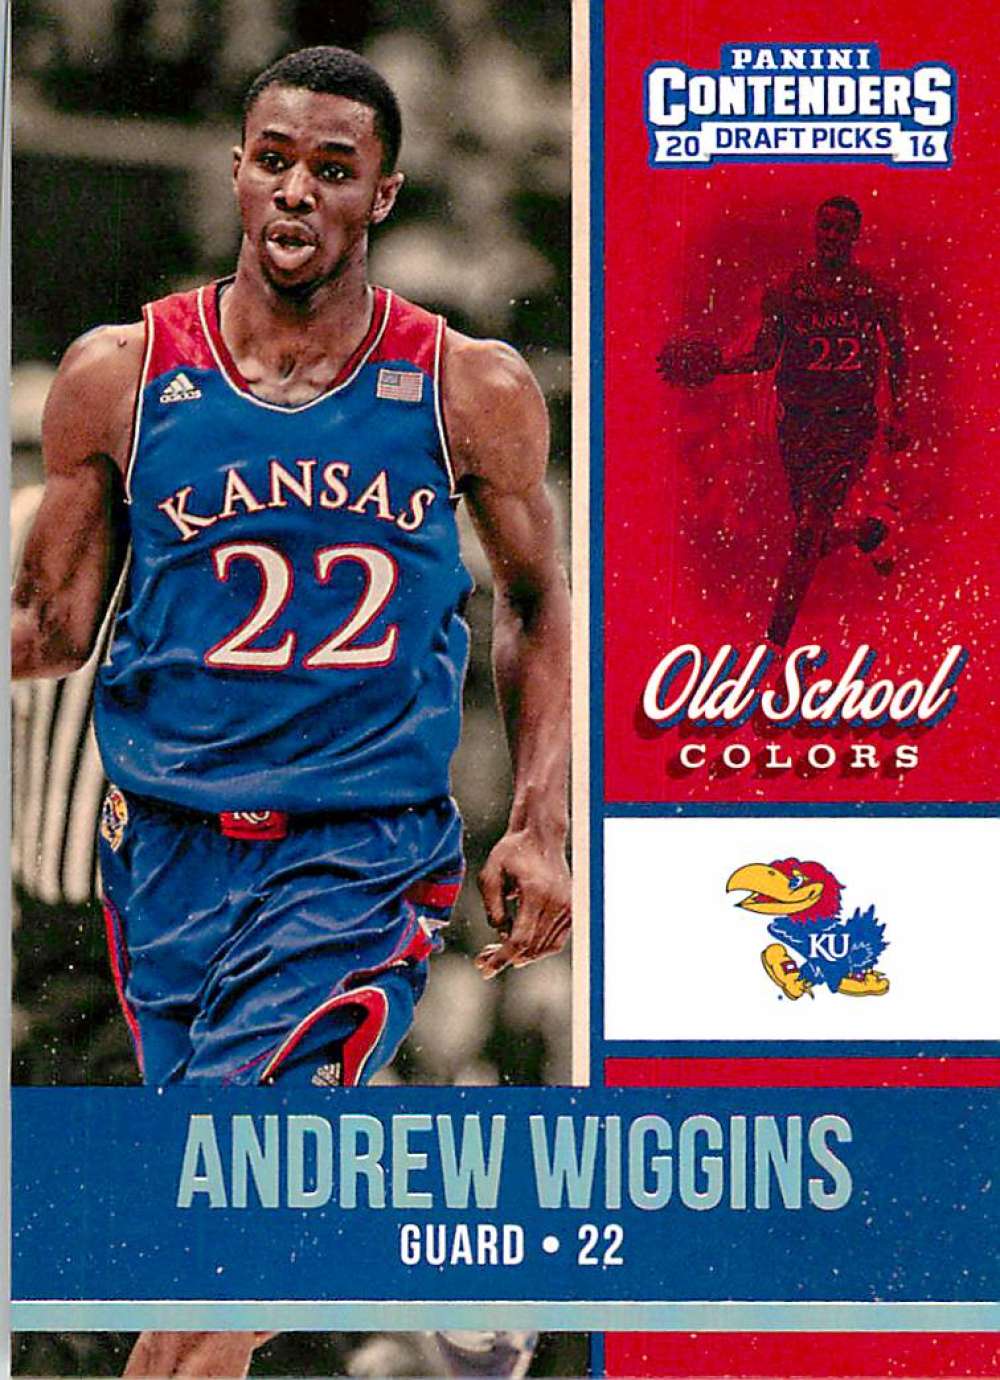 2016-17 Panini Contenders Draft Picks Old School Colors #1 Andrew Wiggins Kansas Jayhawks Collegiate Basketball Card